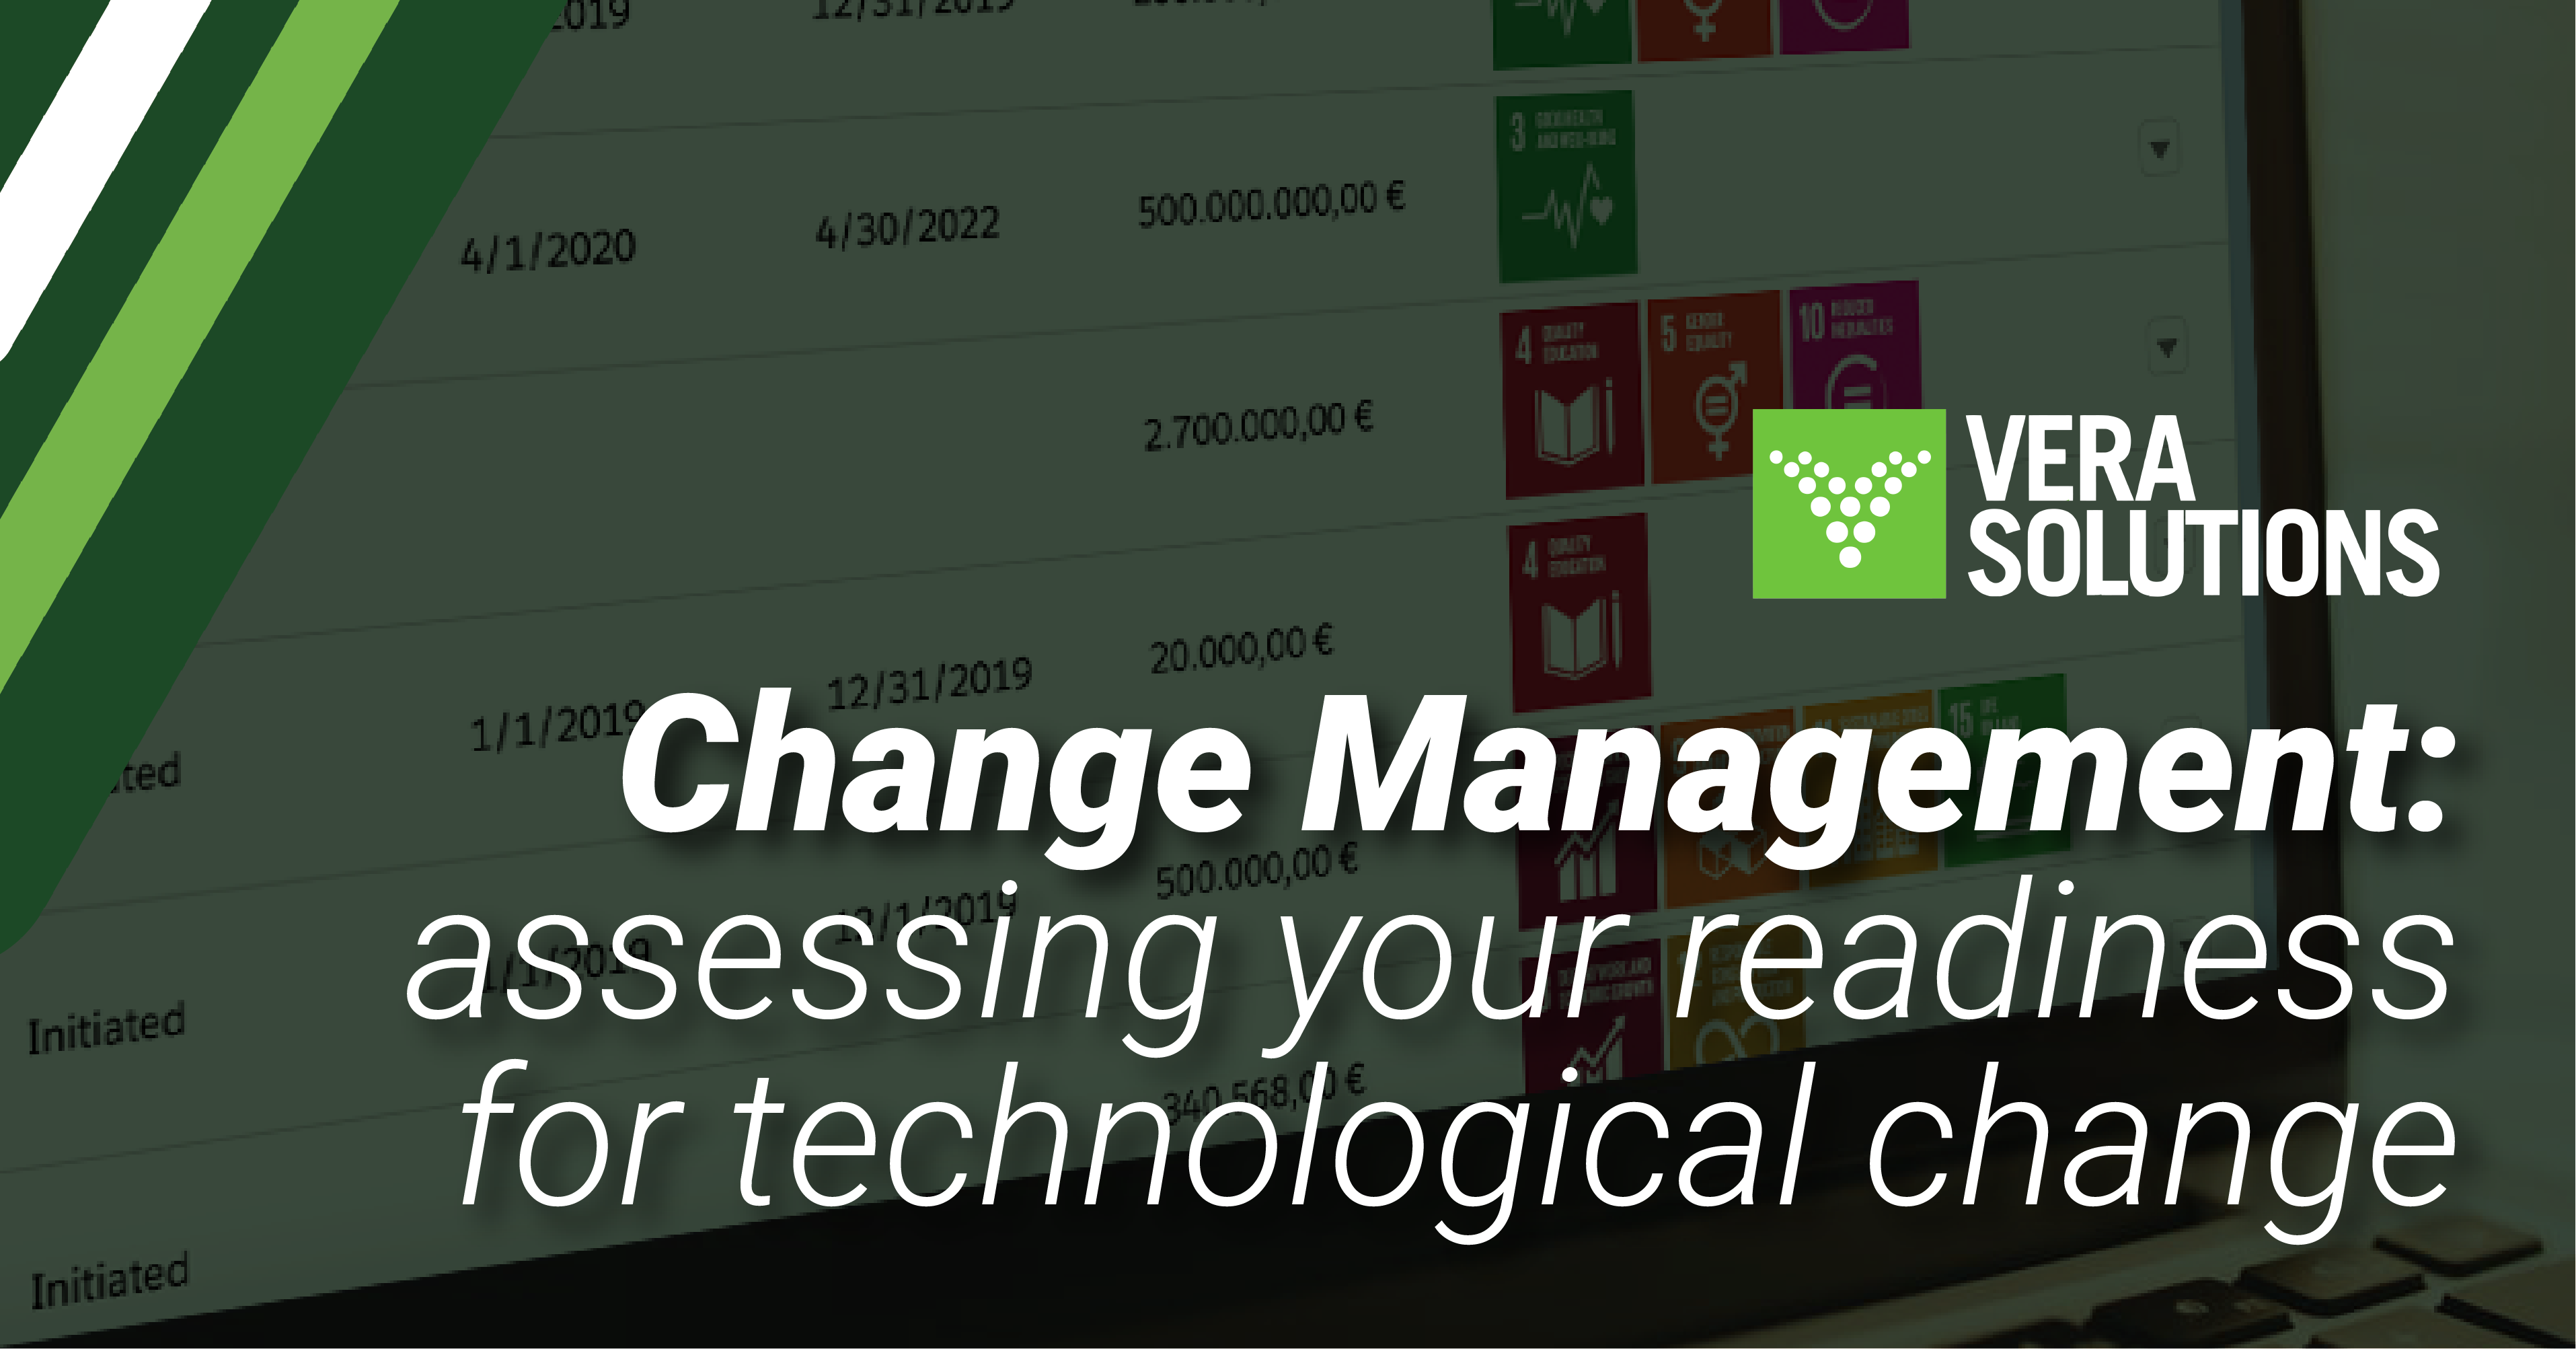 Change Management feature image